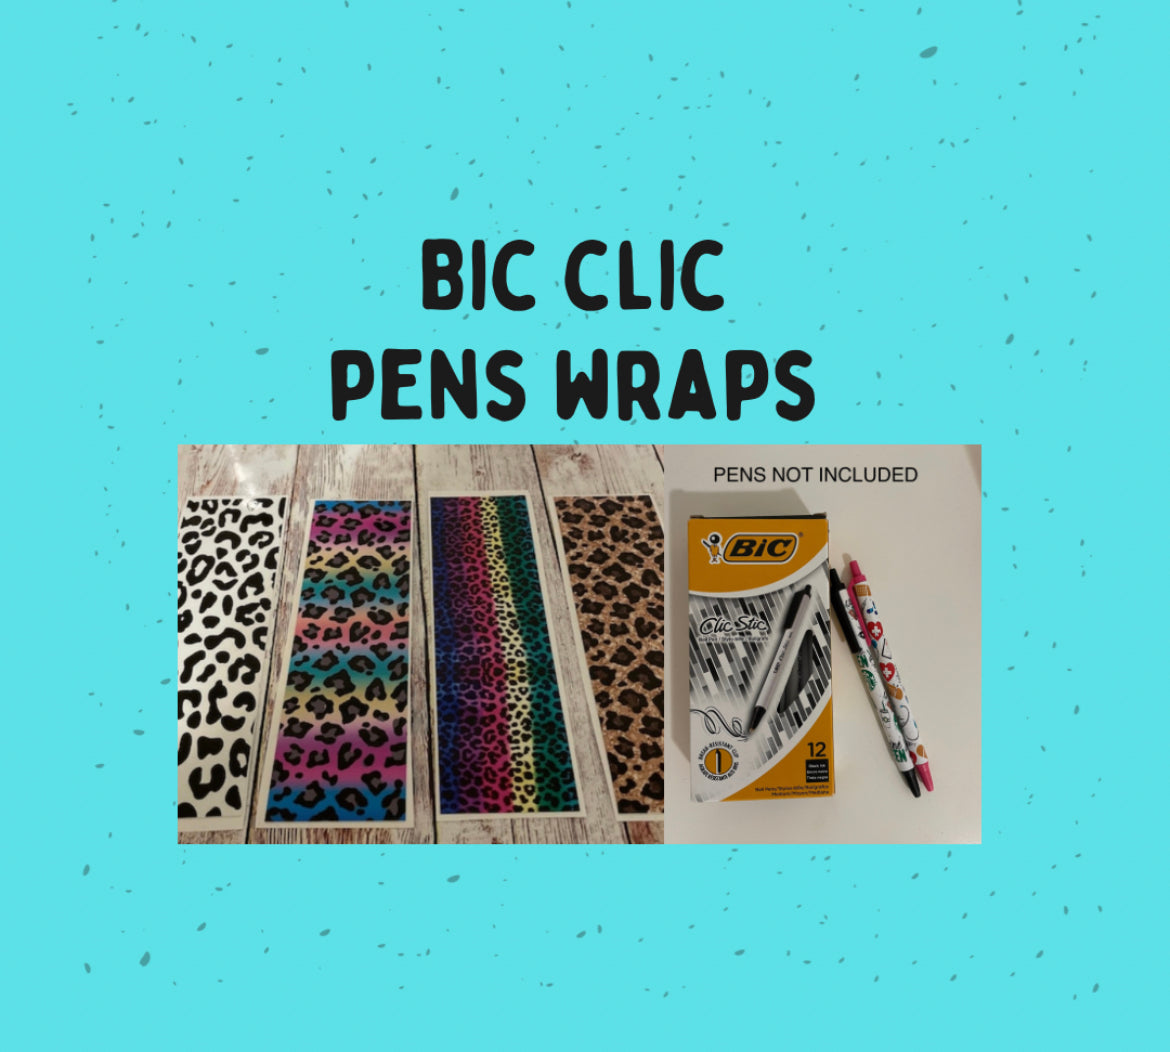 1 Pen Wrap for BIC CLIC RETRACTABLE PENS